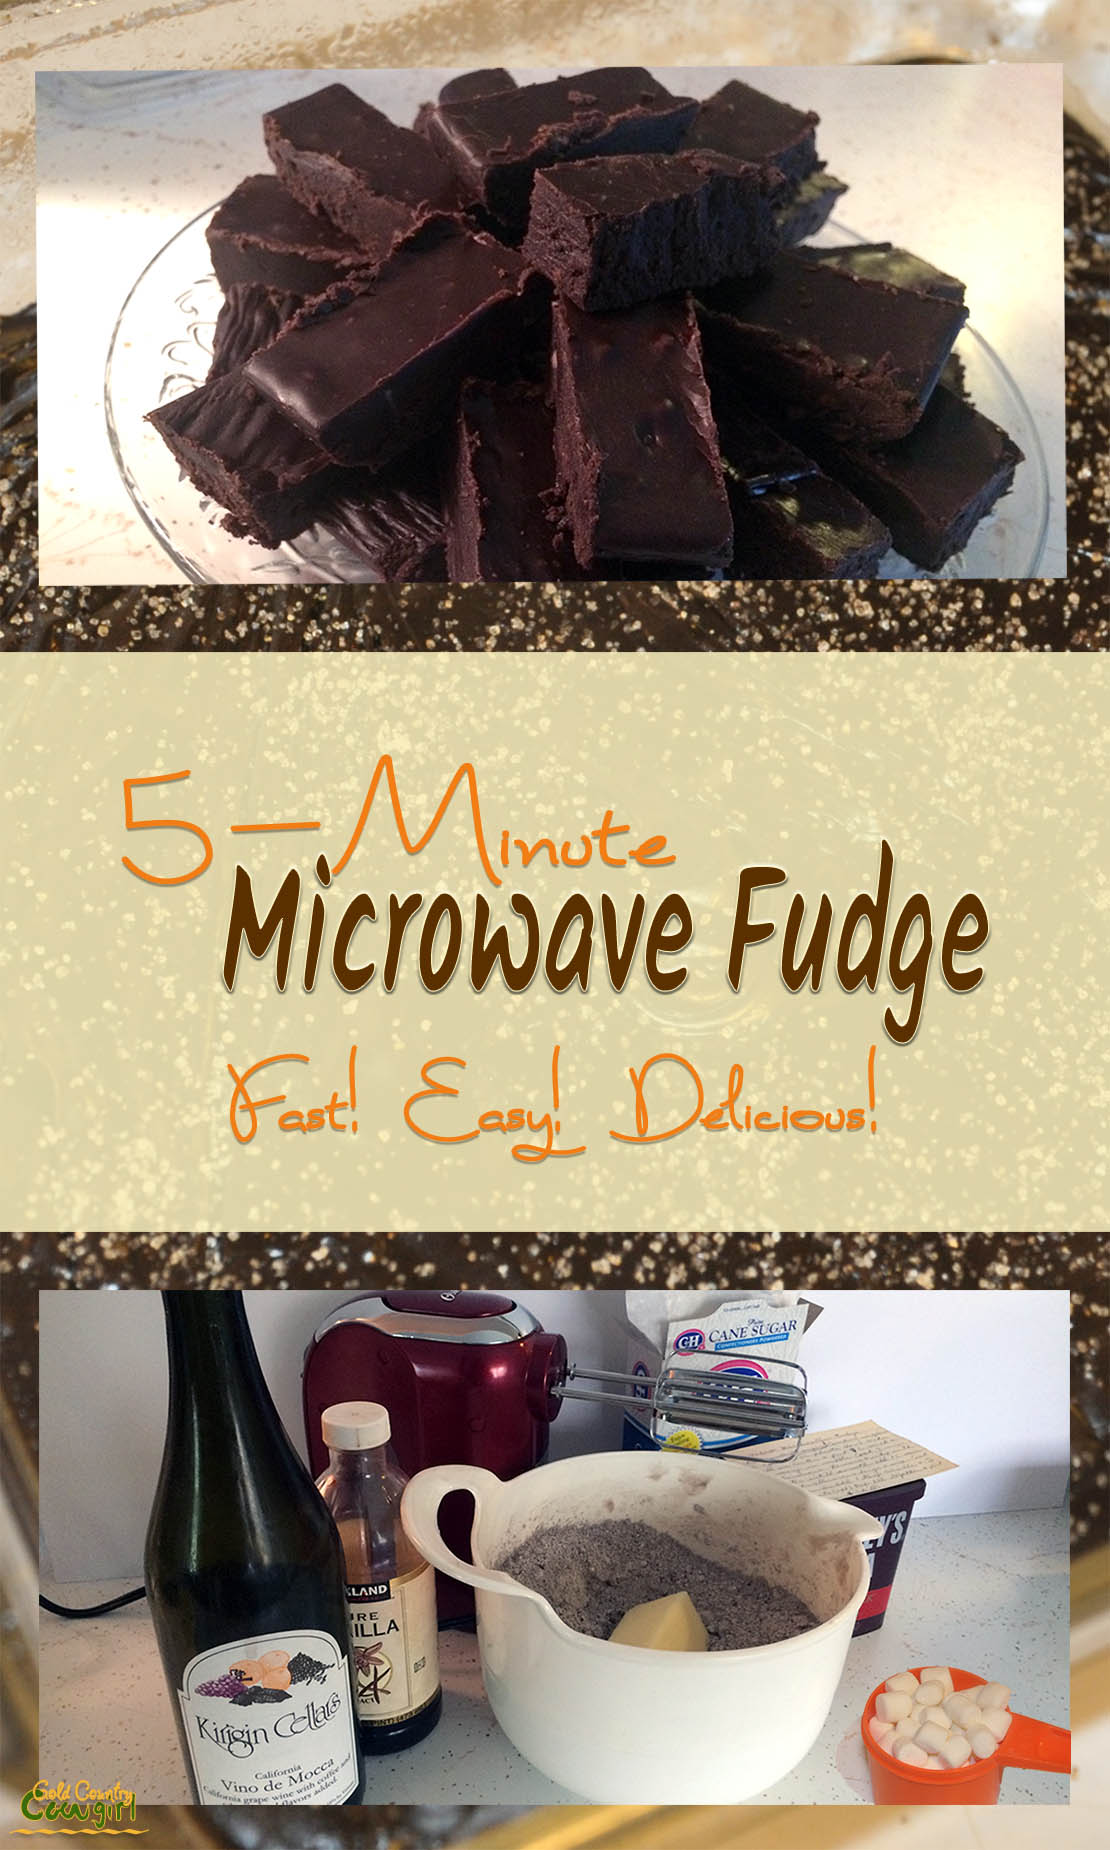 microwave-fudge-title-v